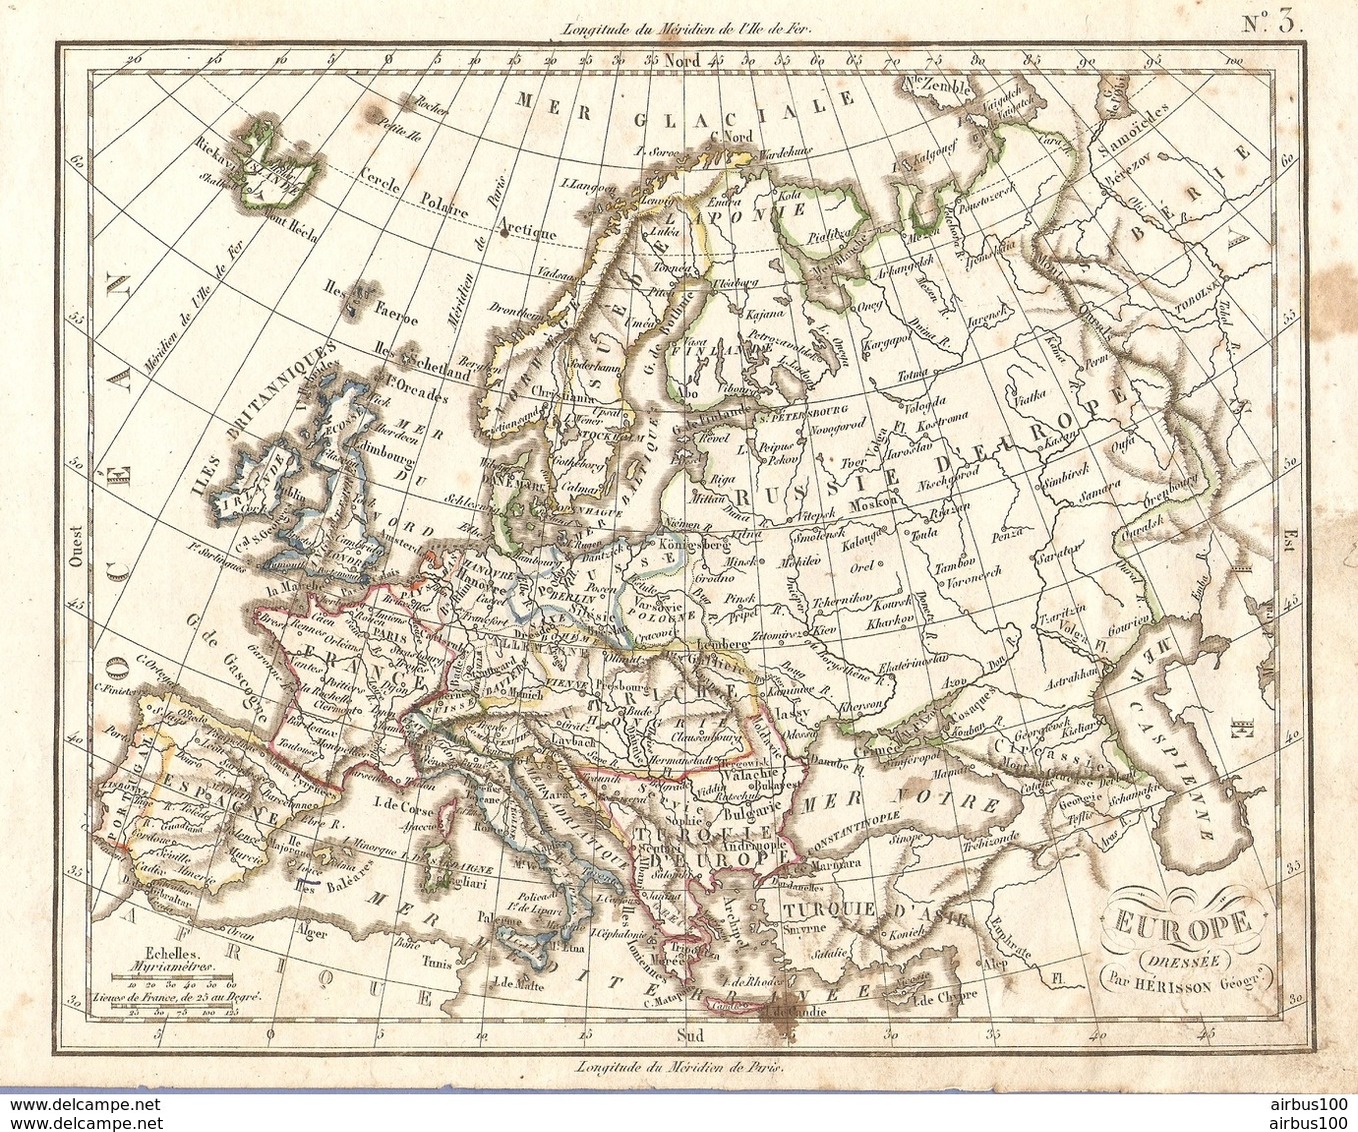 CARTE ANNÉE 1828 EUROPE - CARD YEAR 1828 EUROPE - KARTEN JAHR 1828 EUROPA - TARJETA 1828 EUROPA - DI CARTA 1828 EUROPA - Mapas Geográficas